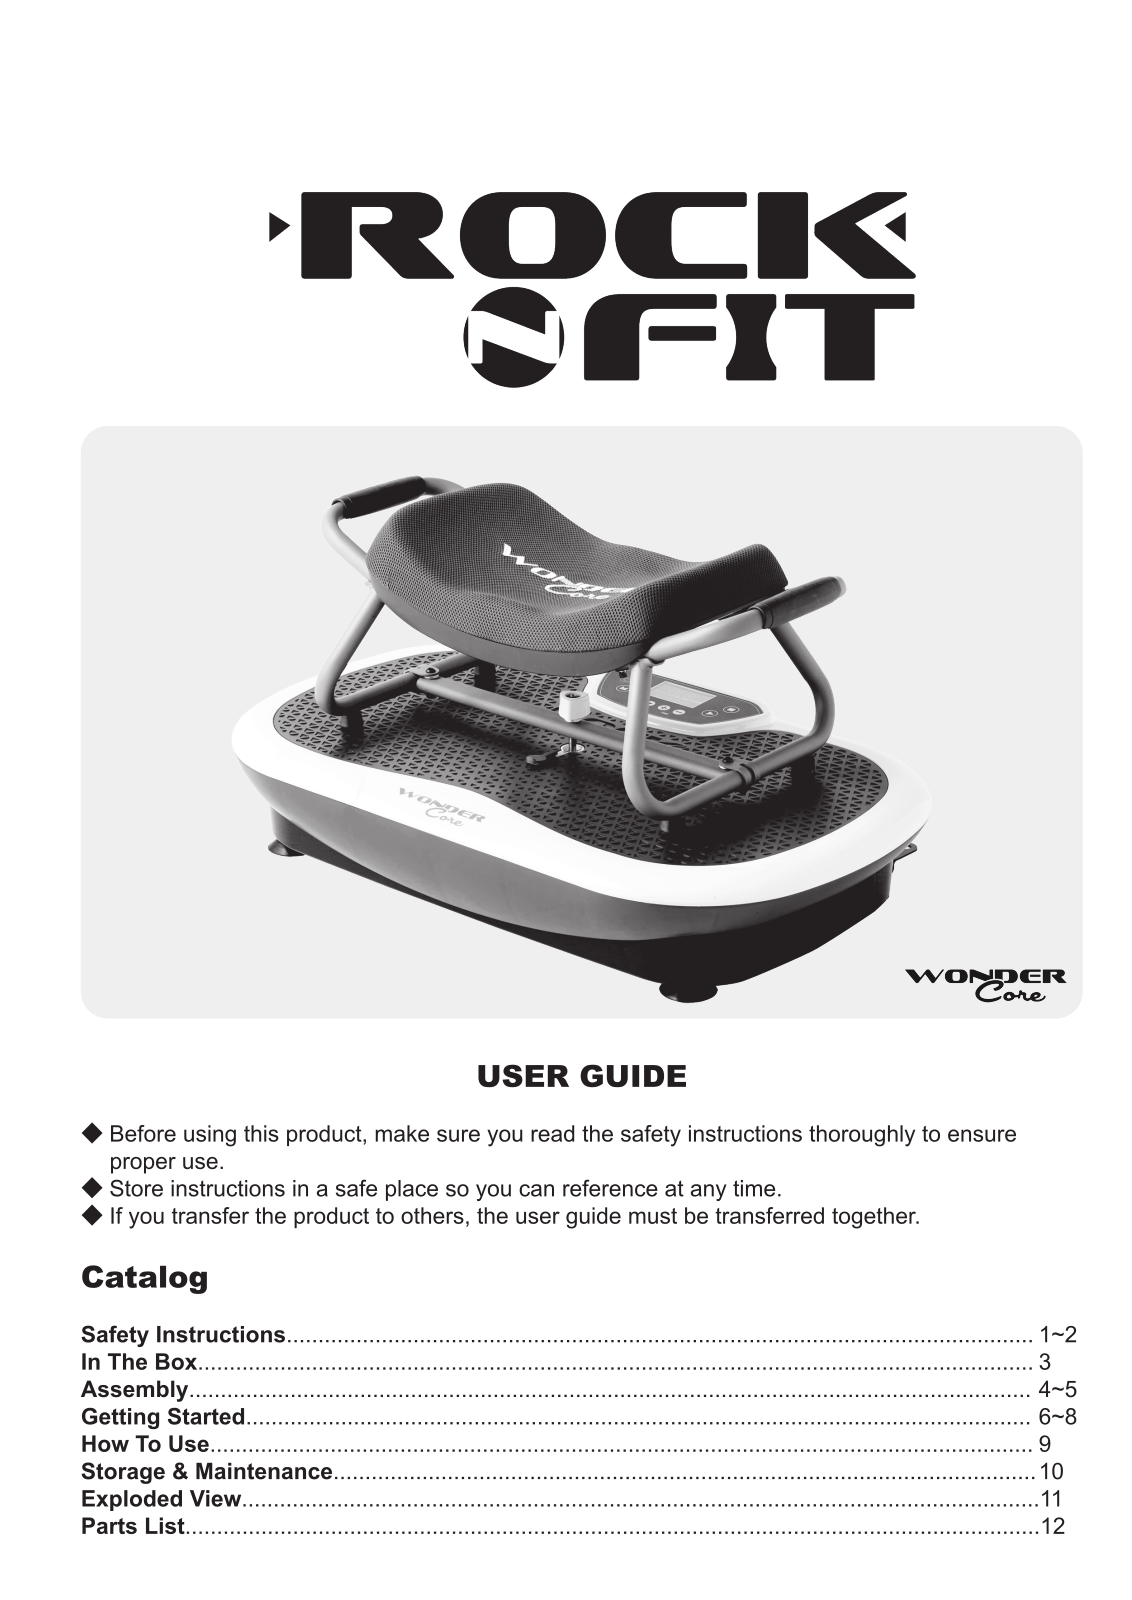 WonderCore Rock n Fit Instruction manual